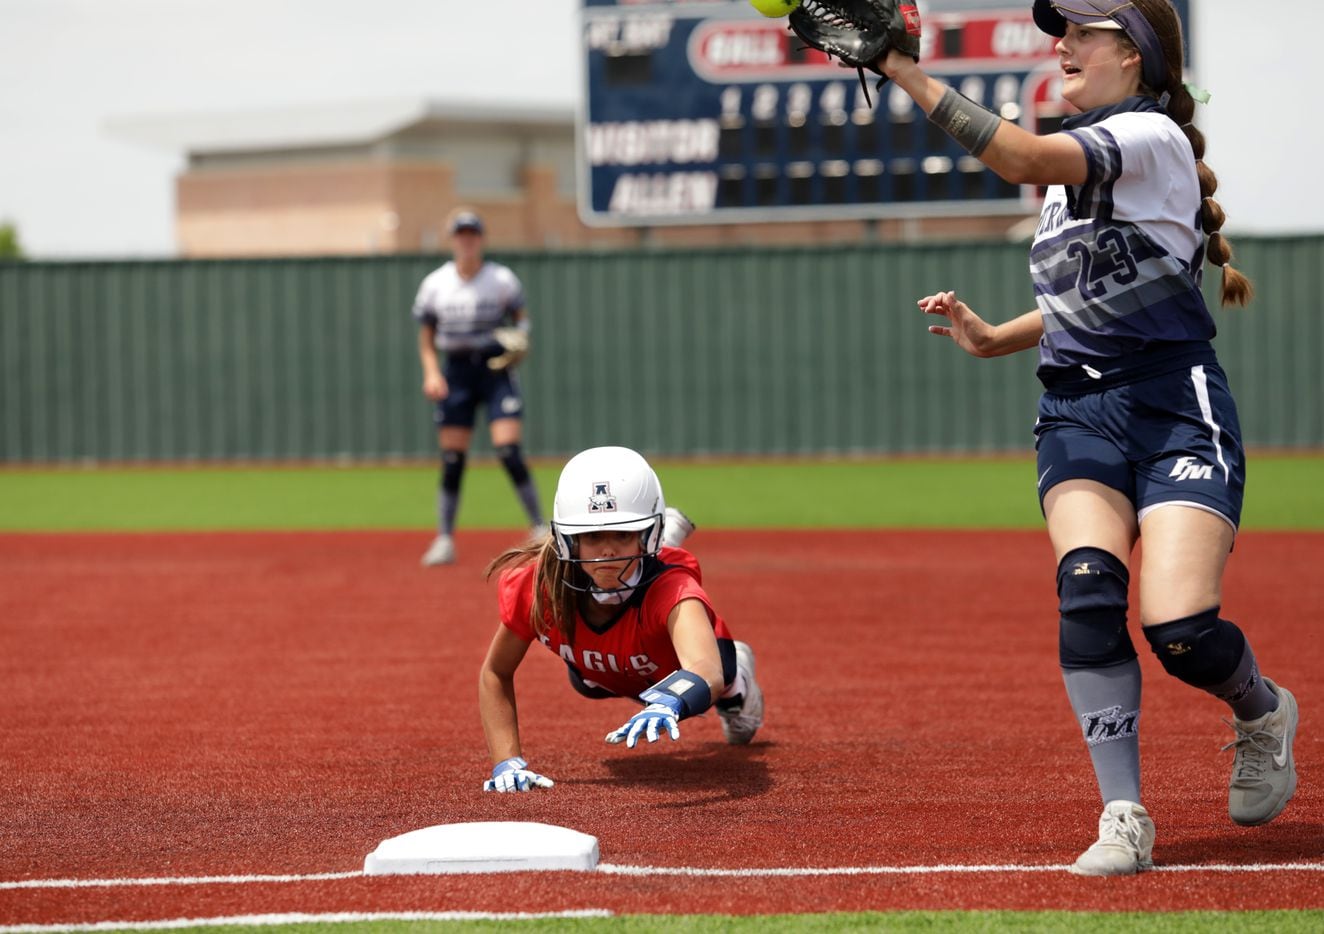 Allen High School player #17, Chloe Schimmel, slides back into first base during a softball...